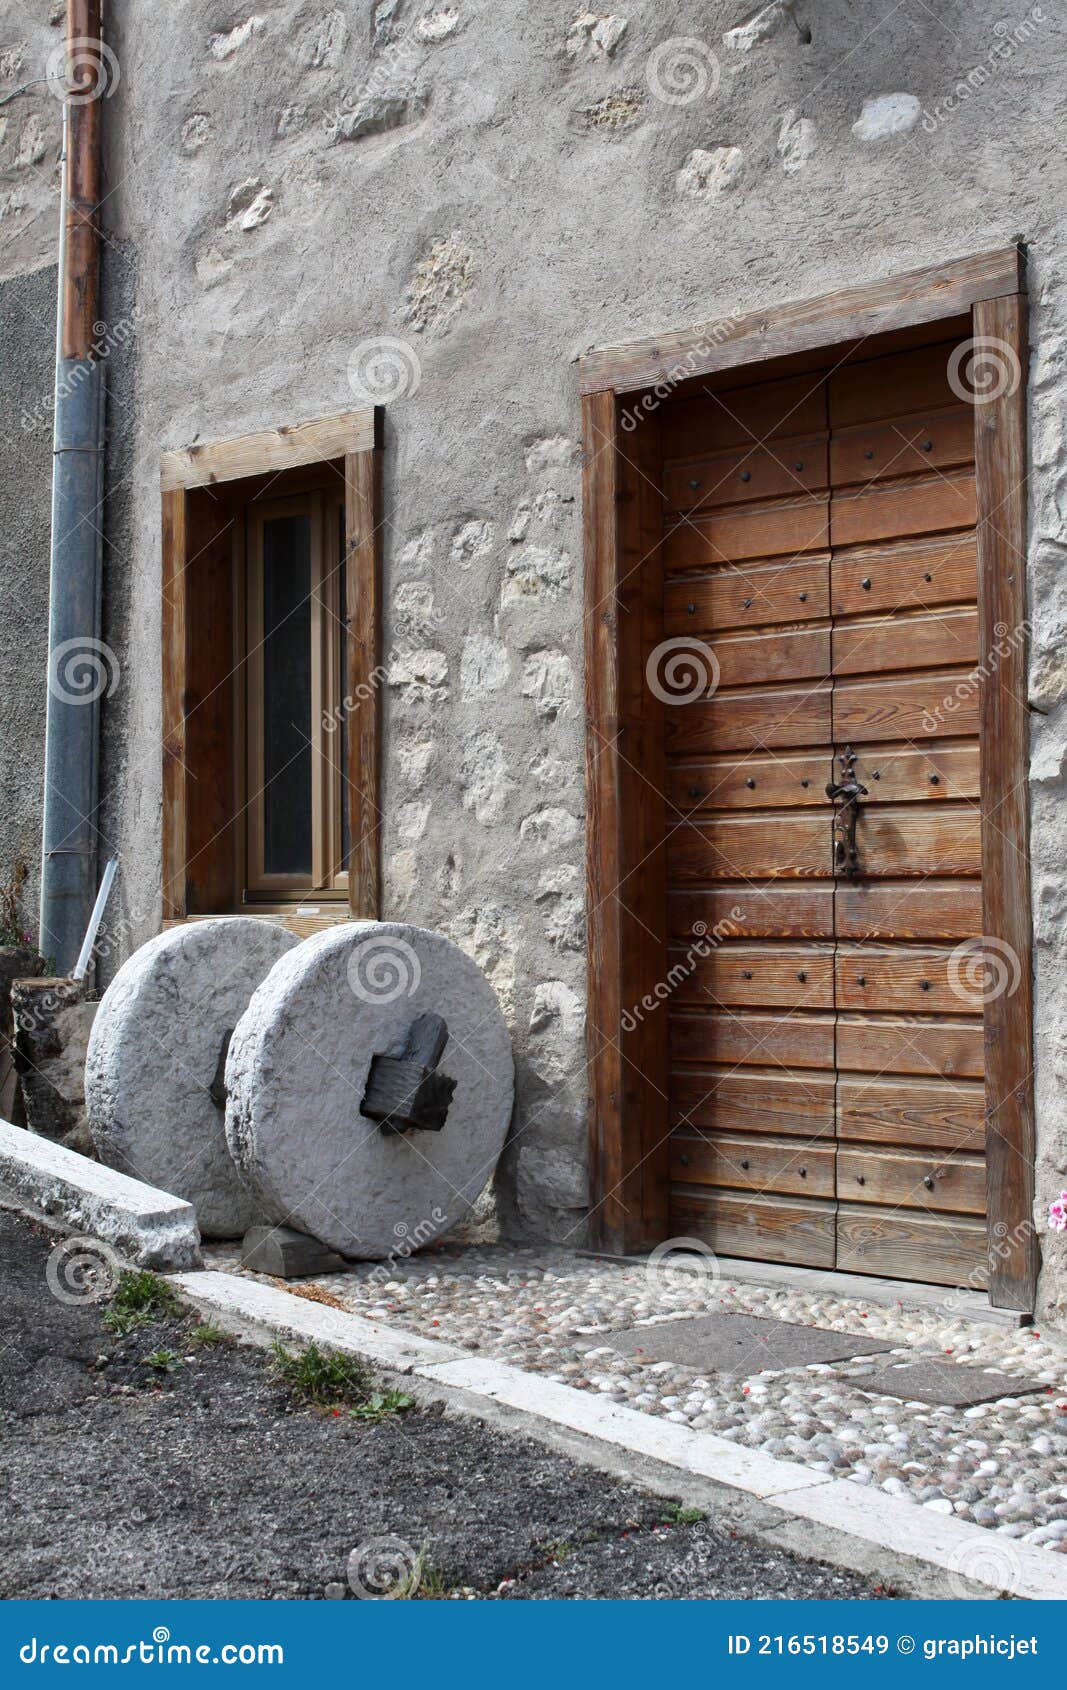 old millstone in guardia, rural town in trentino alto adige, italy